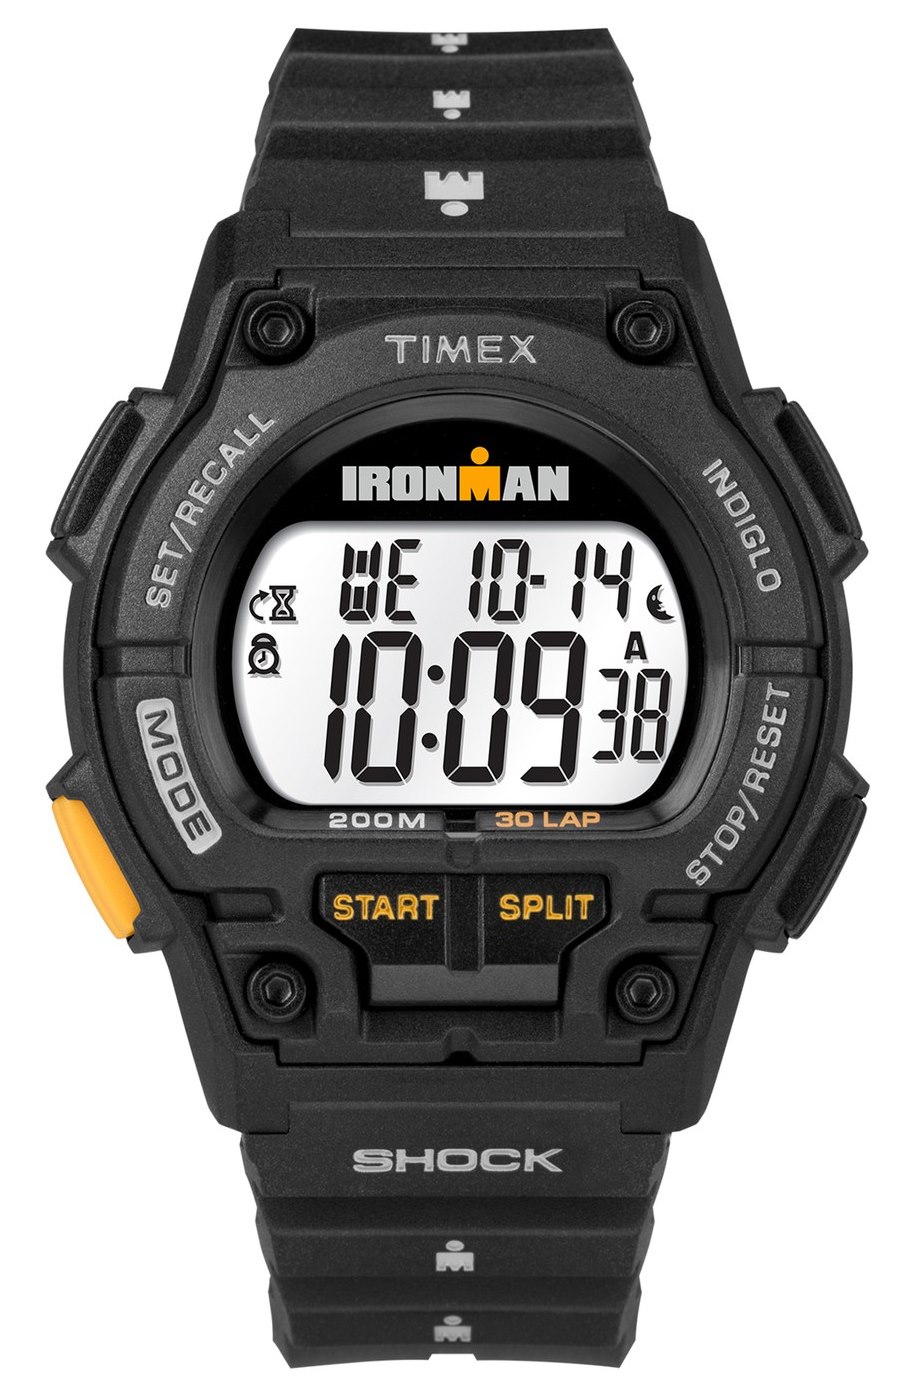 Timex Todd Snyder BIG IRON MAN 42MM Digital Resin Mens Watch TW5M17900JV